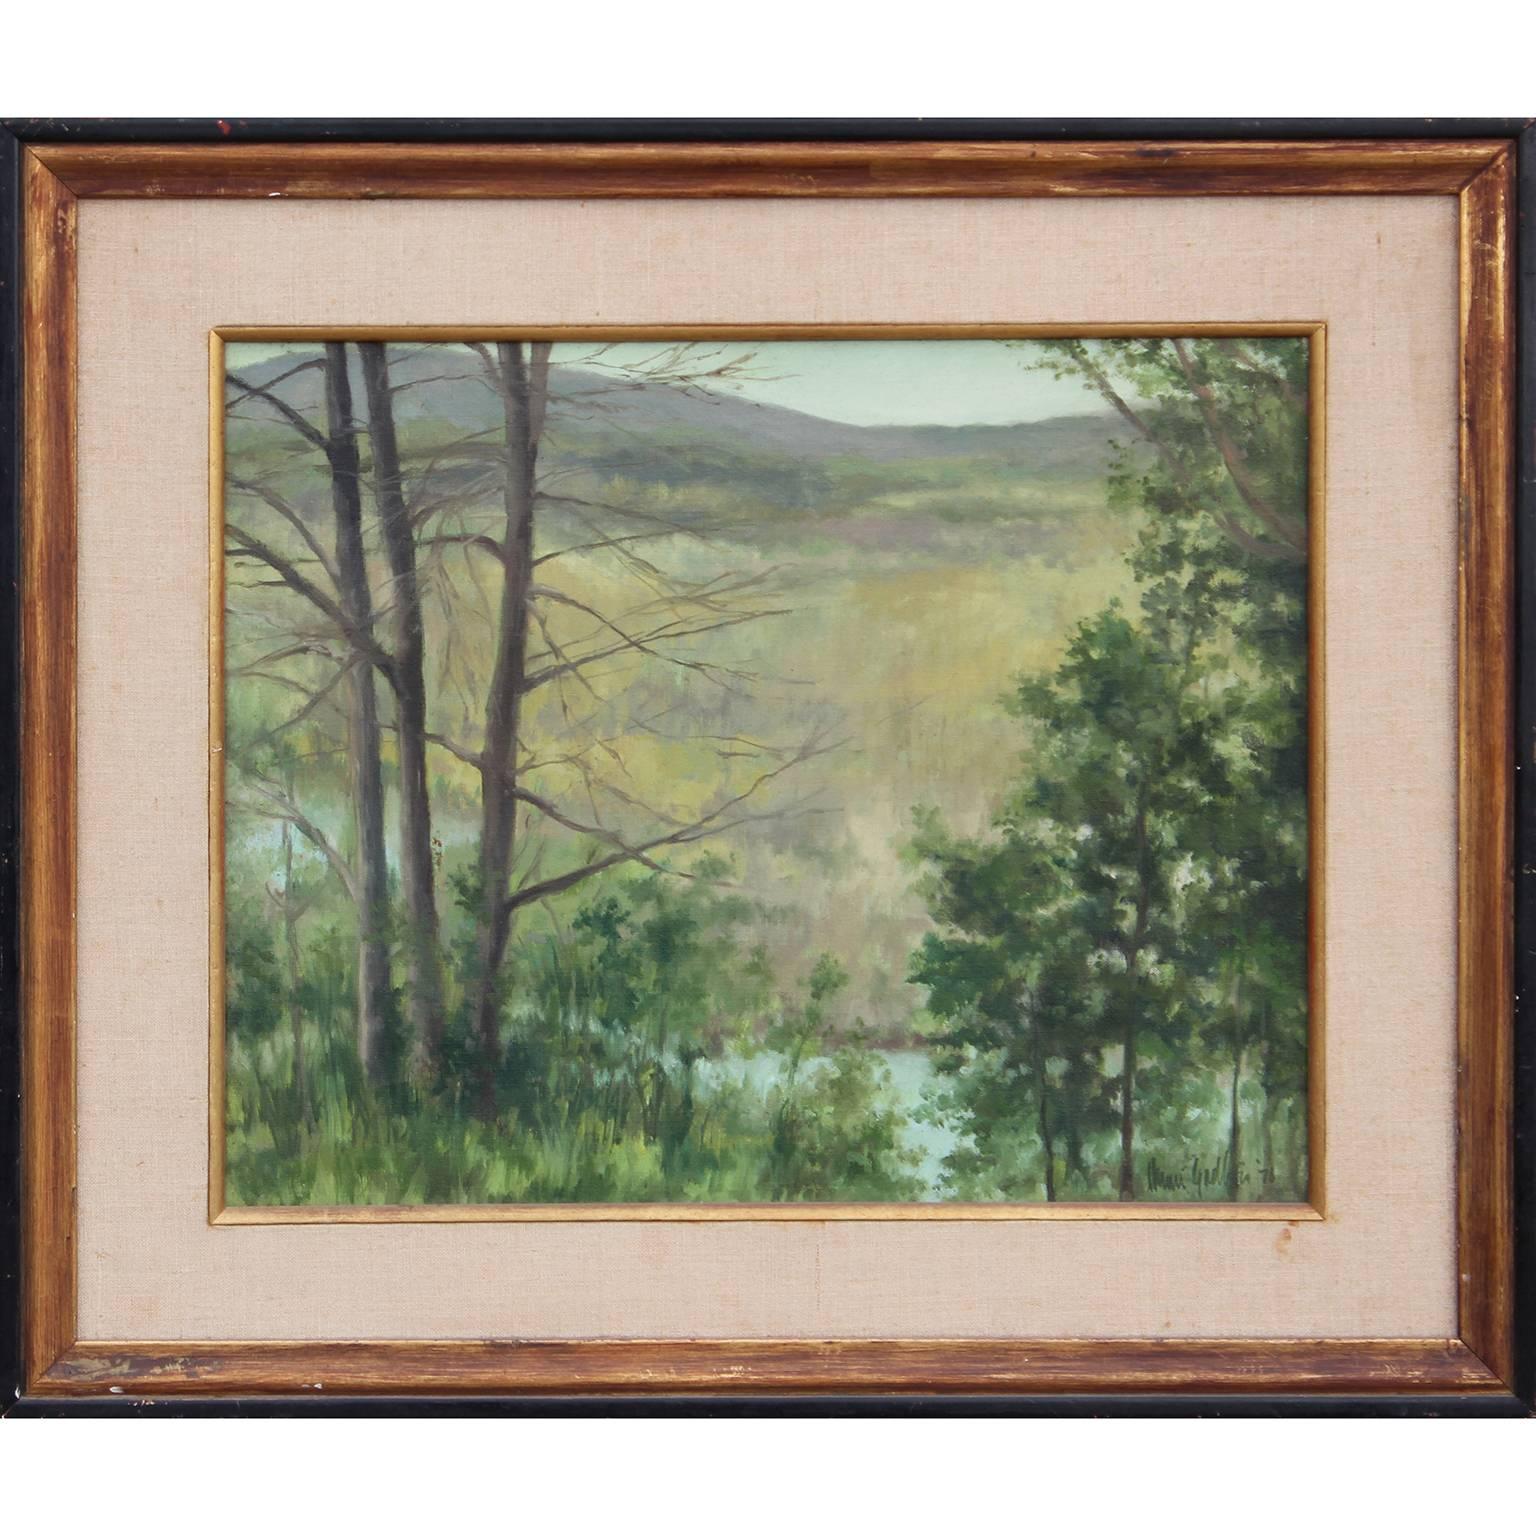 Henri Gadbois Landscape Painting - "Down to the Lily Pond" Landscape Oil Painting